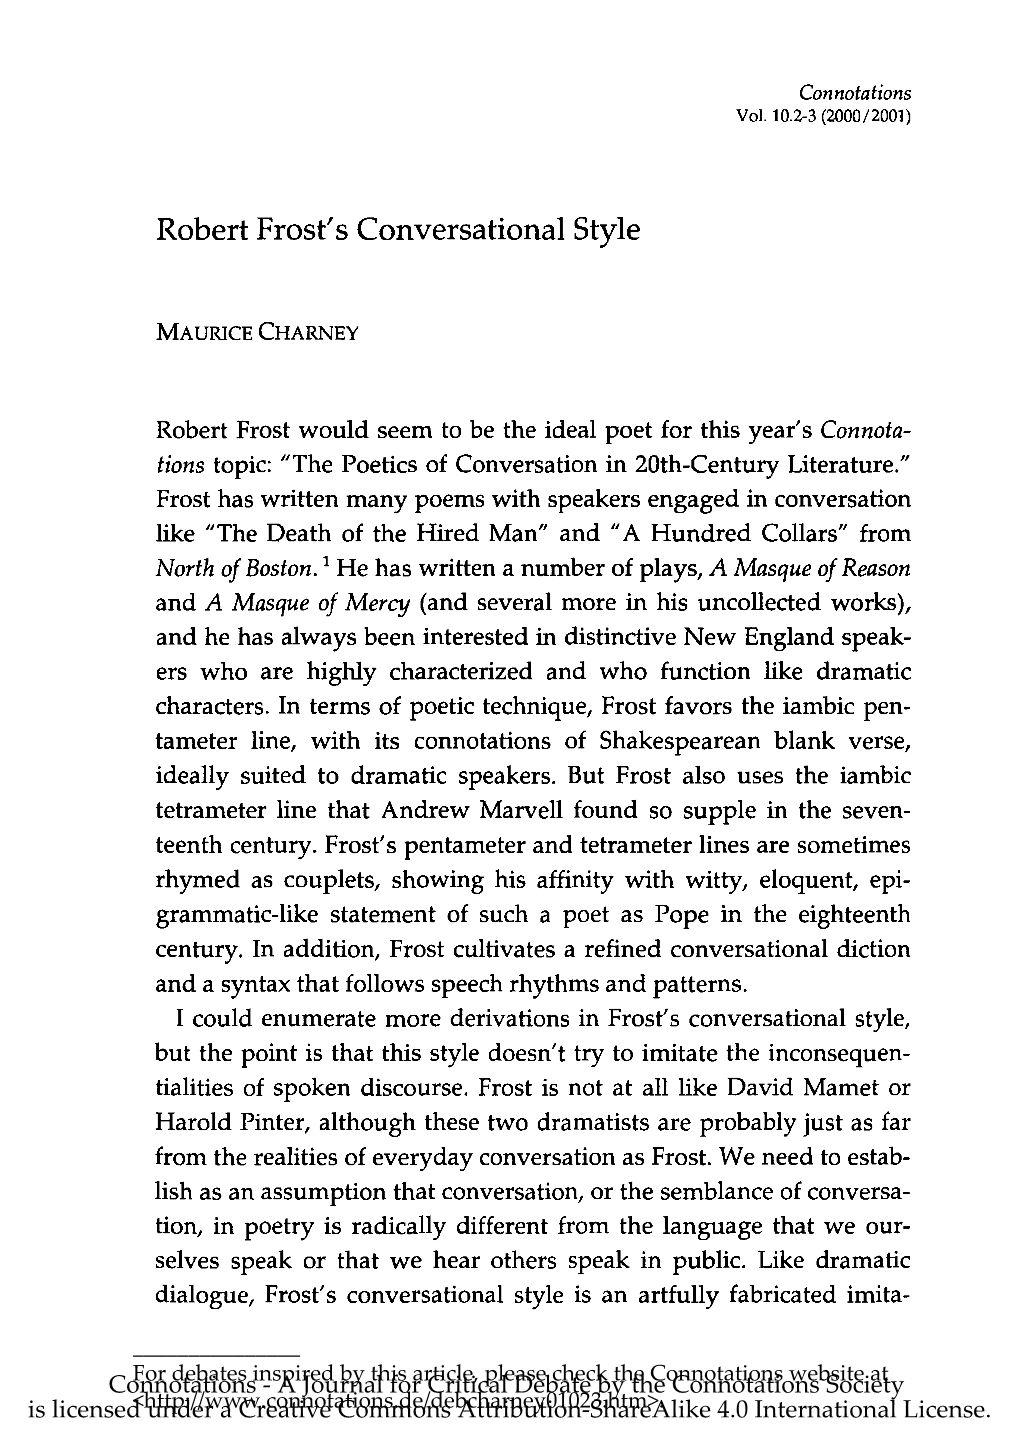 Robert Frost's Conversational Style